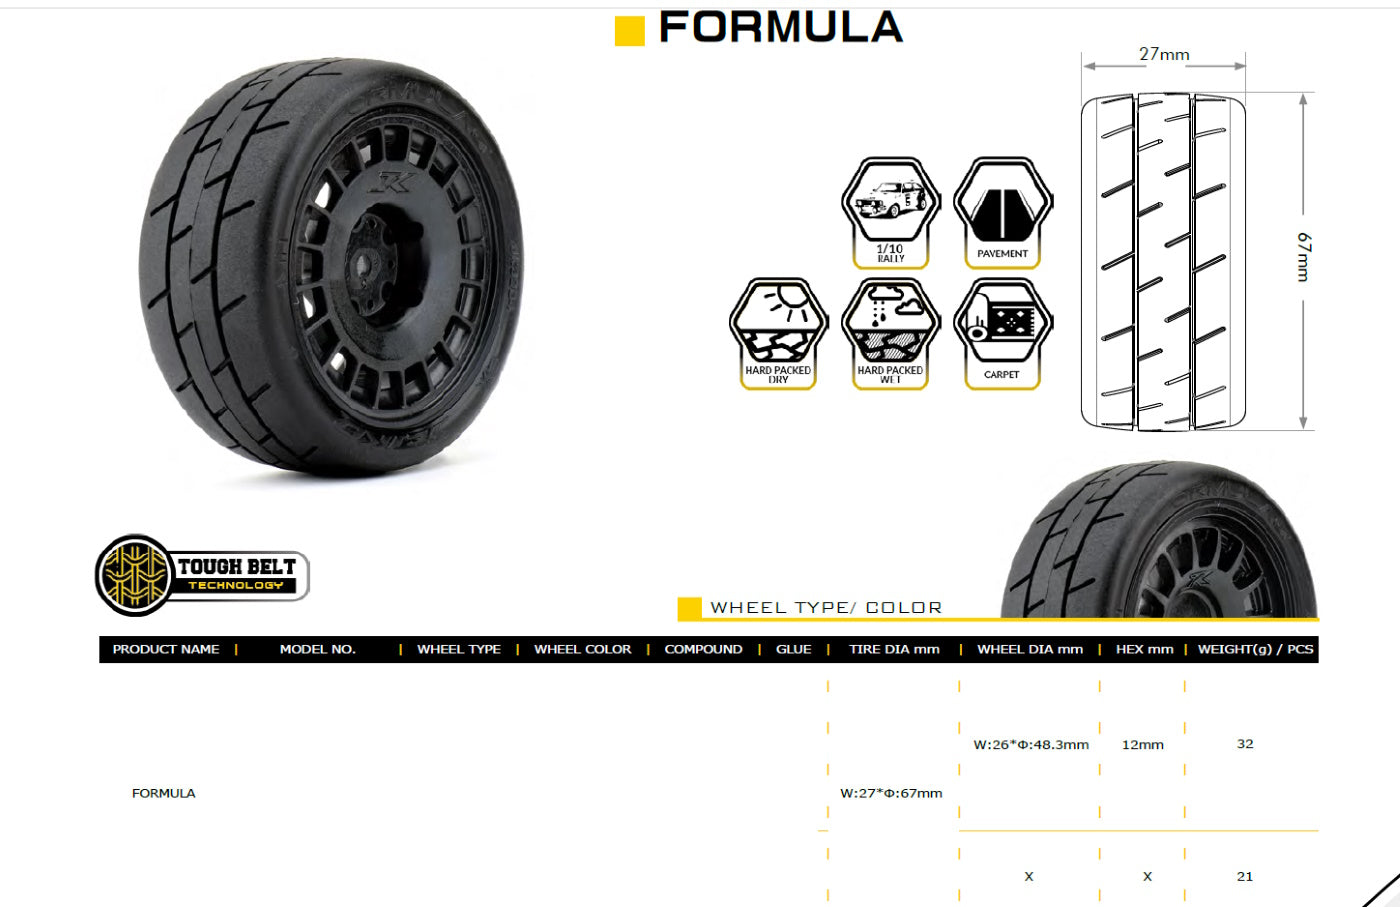 Powerhobby 1/10 Rally Car Formula Mounted Tires / Radial Wheels (4) - PowerHobby